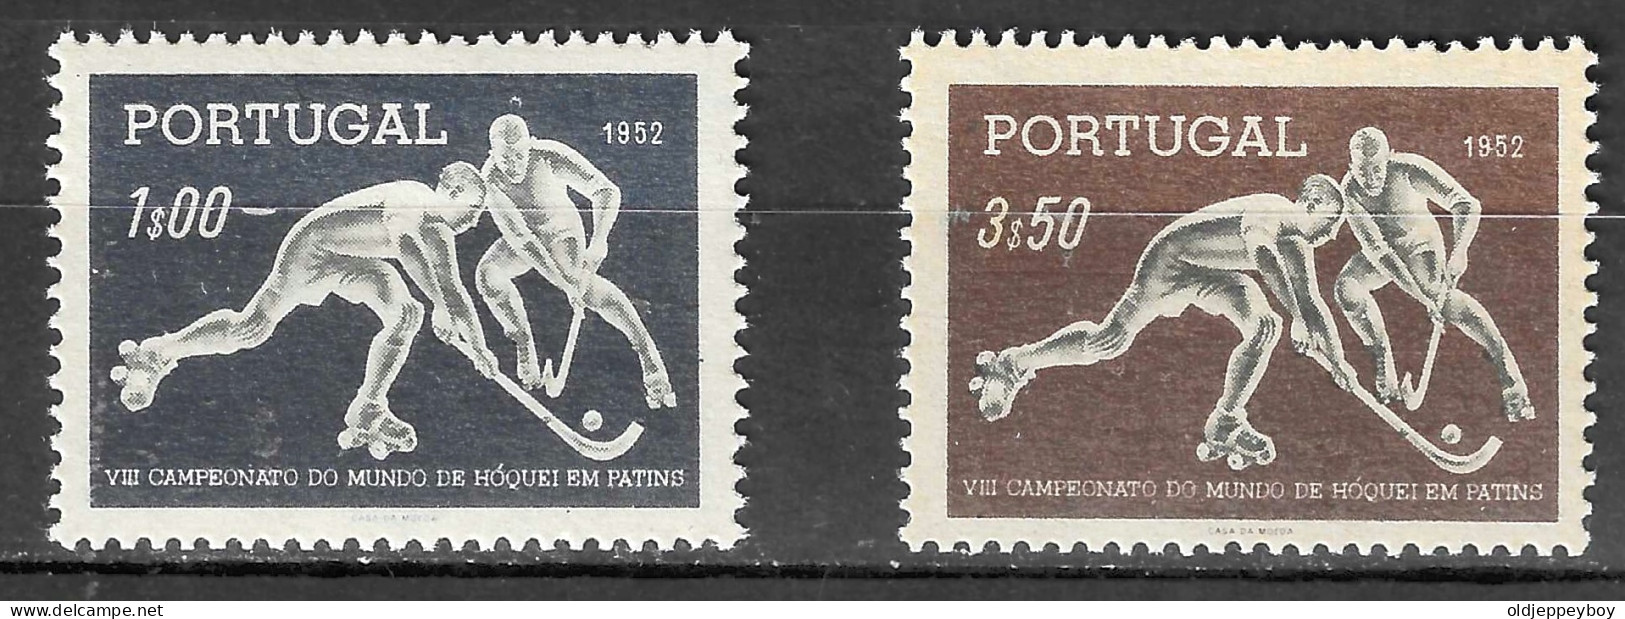 Portugal 1952 AF#751-752** Hockey On Roller Complete Set Sports MNH (3.50 STAMP WITH GUM DISTURBANCE) - Unused Stamps